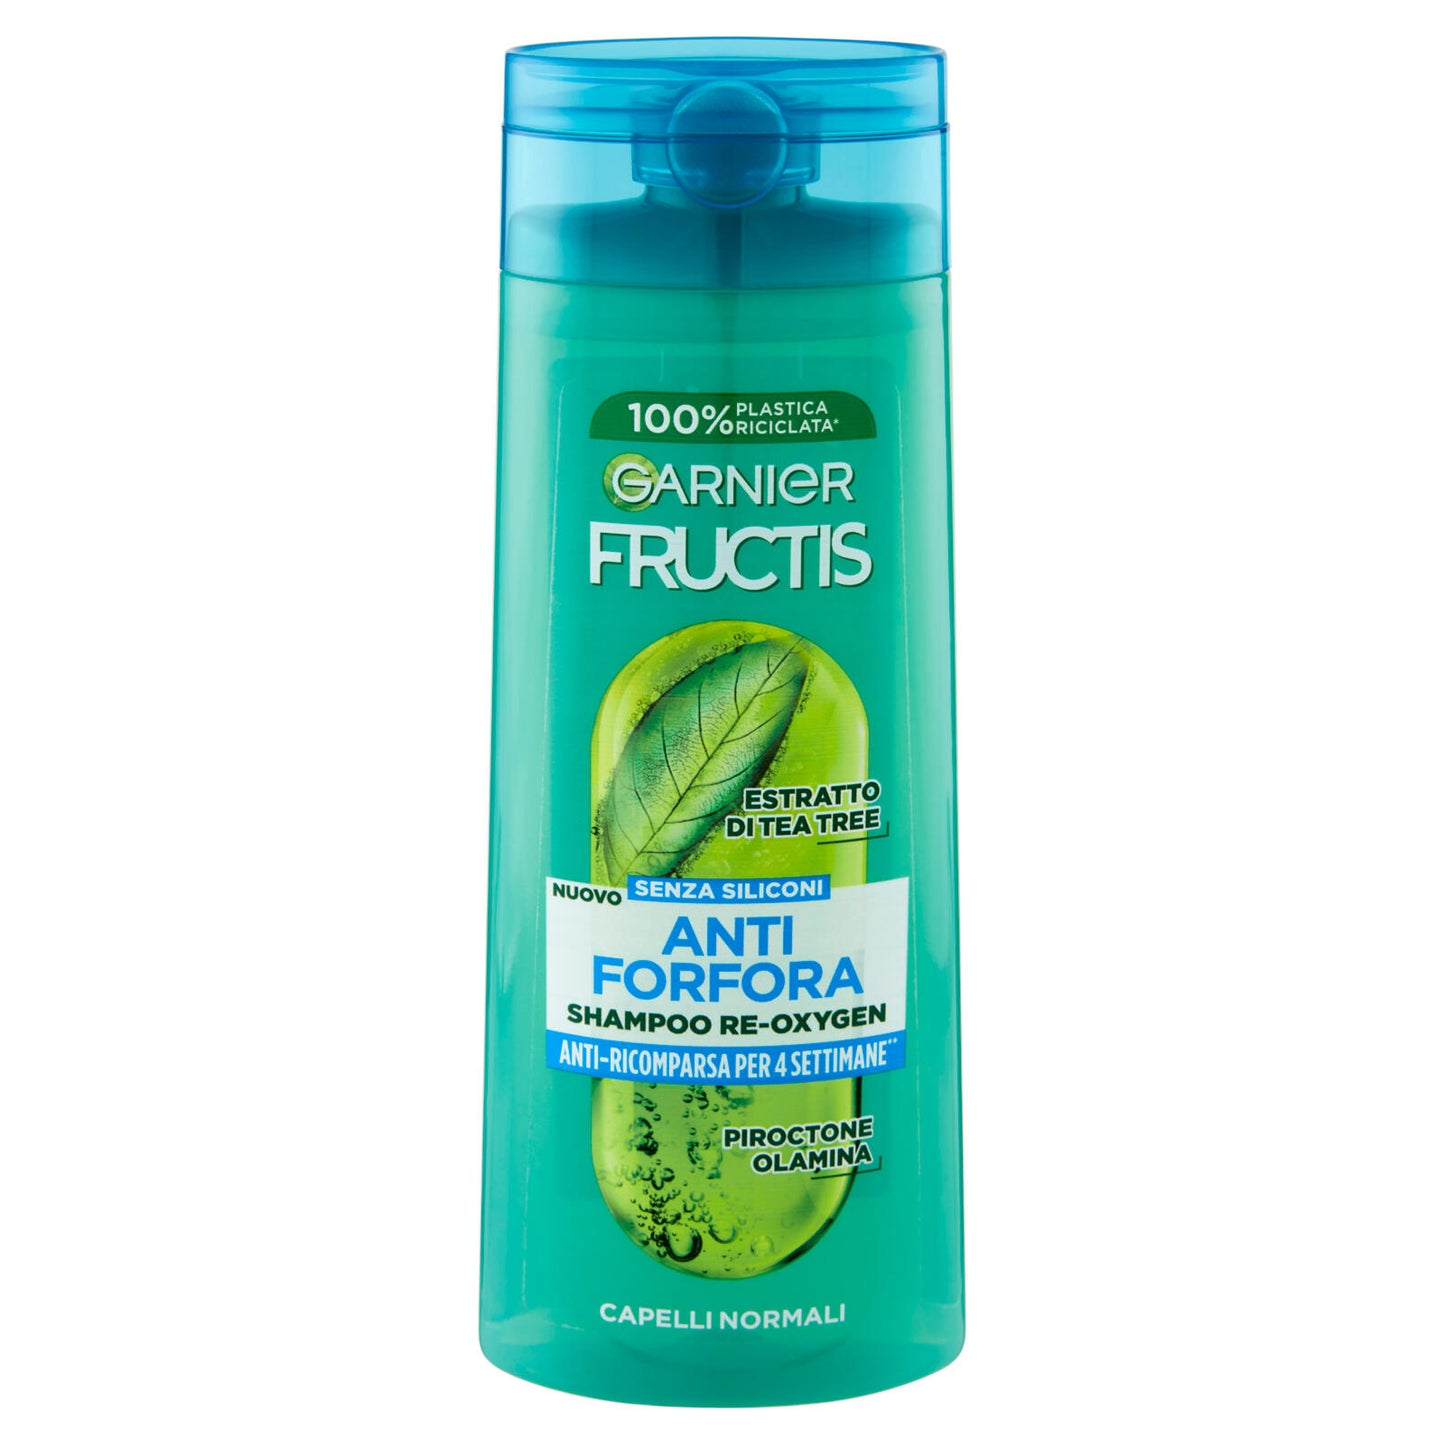 Garnier Fructis Shampoo Antiforfora reoxygen, per capelli normali, 250 ml